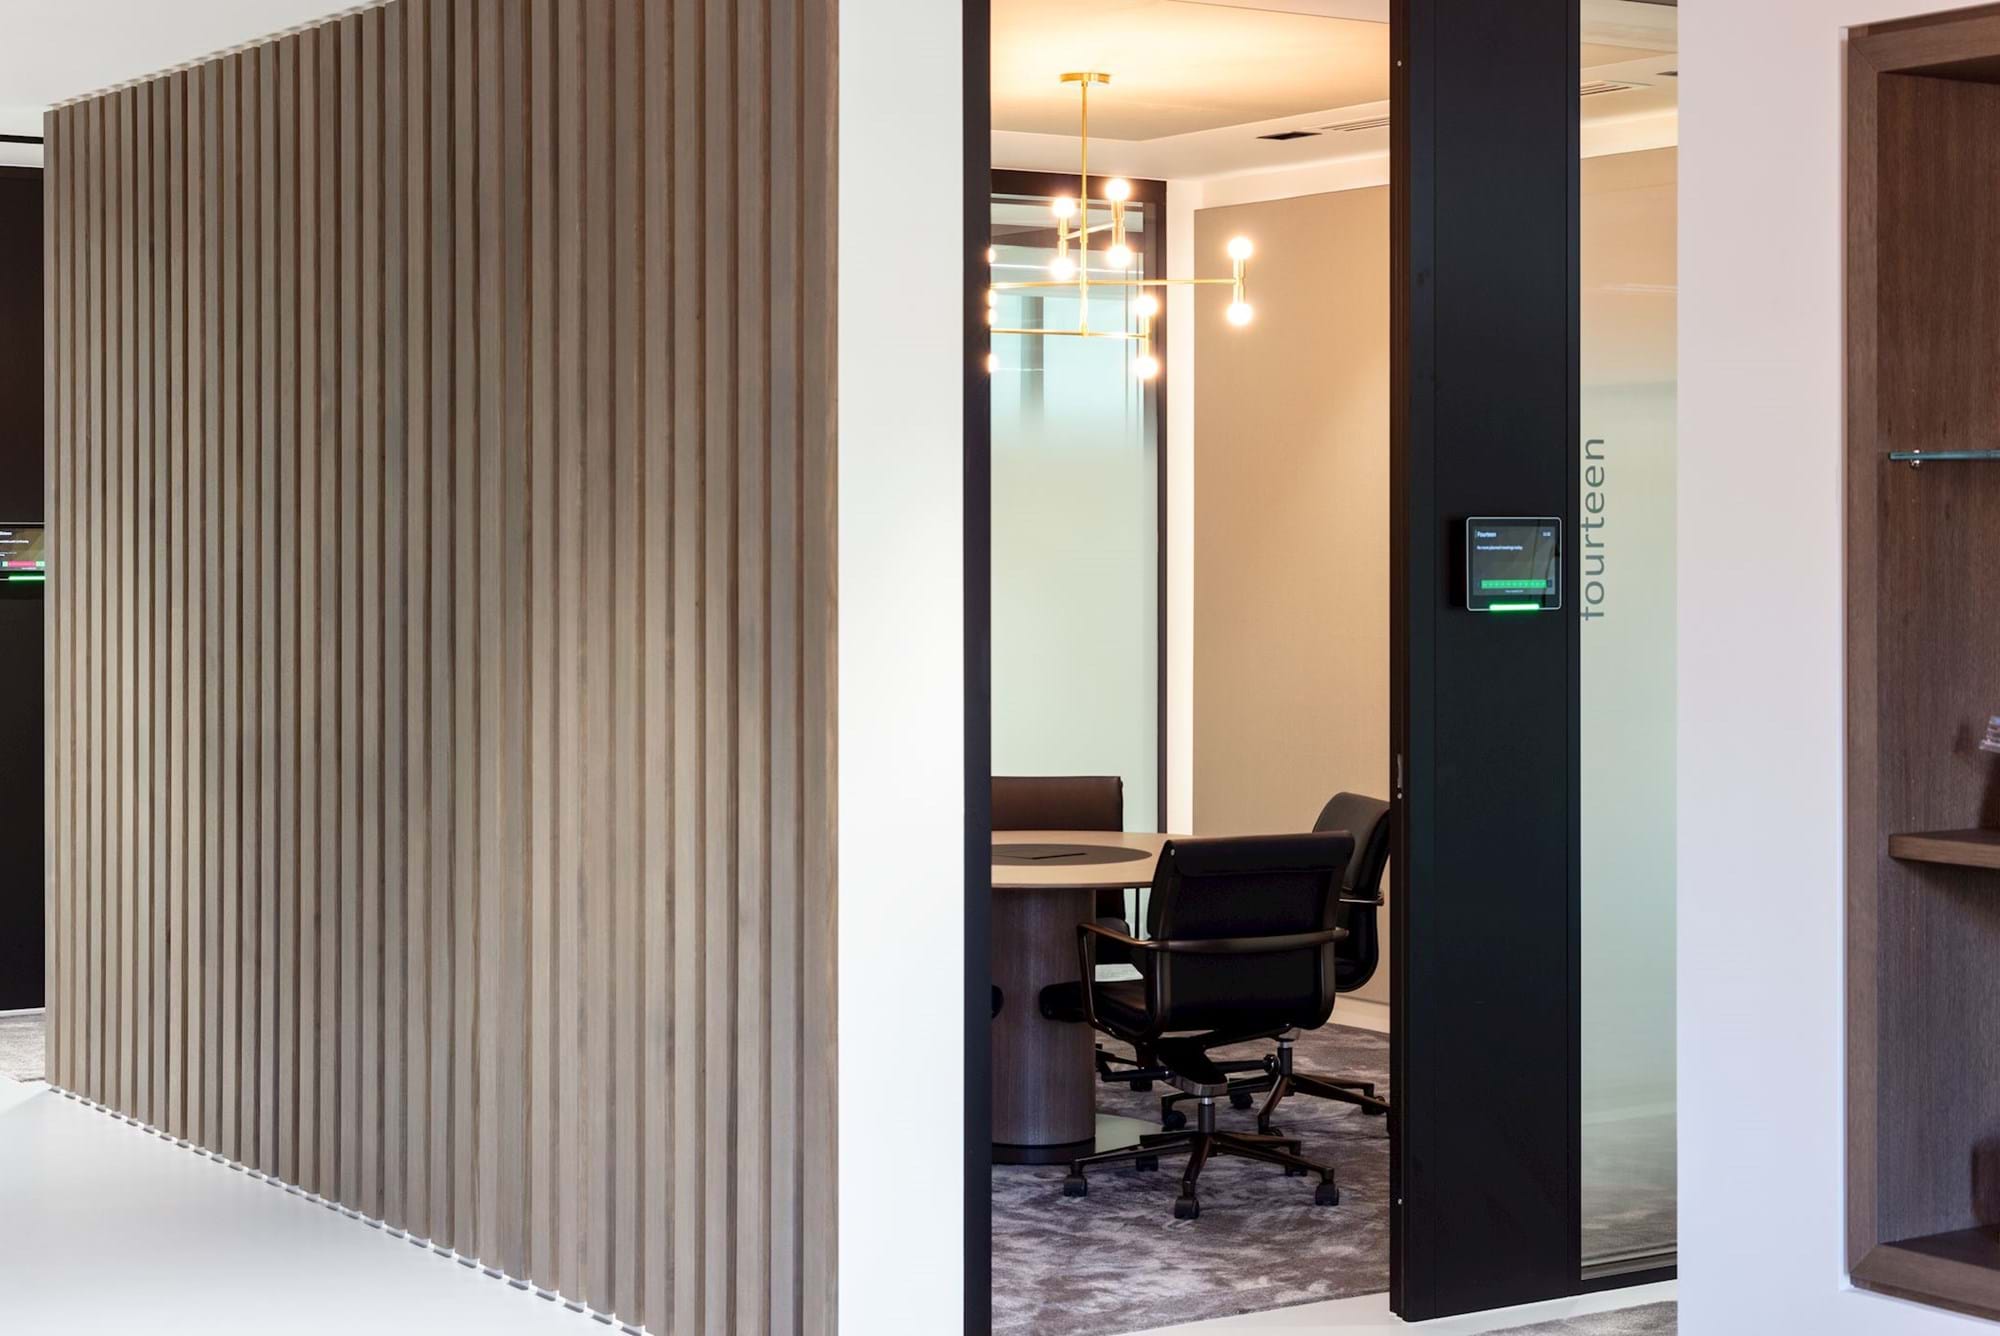 Modus Workspace office design, fit out and refurbishment - Houlihan Lokey - Modus_Houlihan_Lokey meeting room.jpg